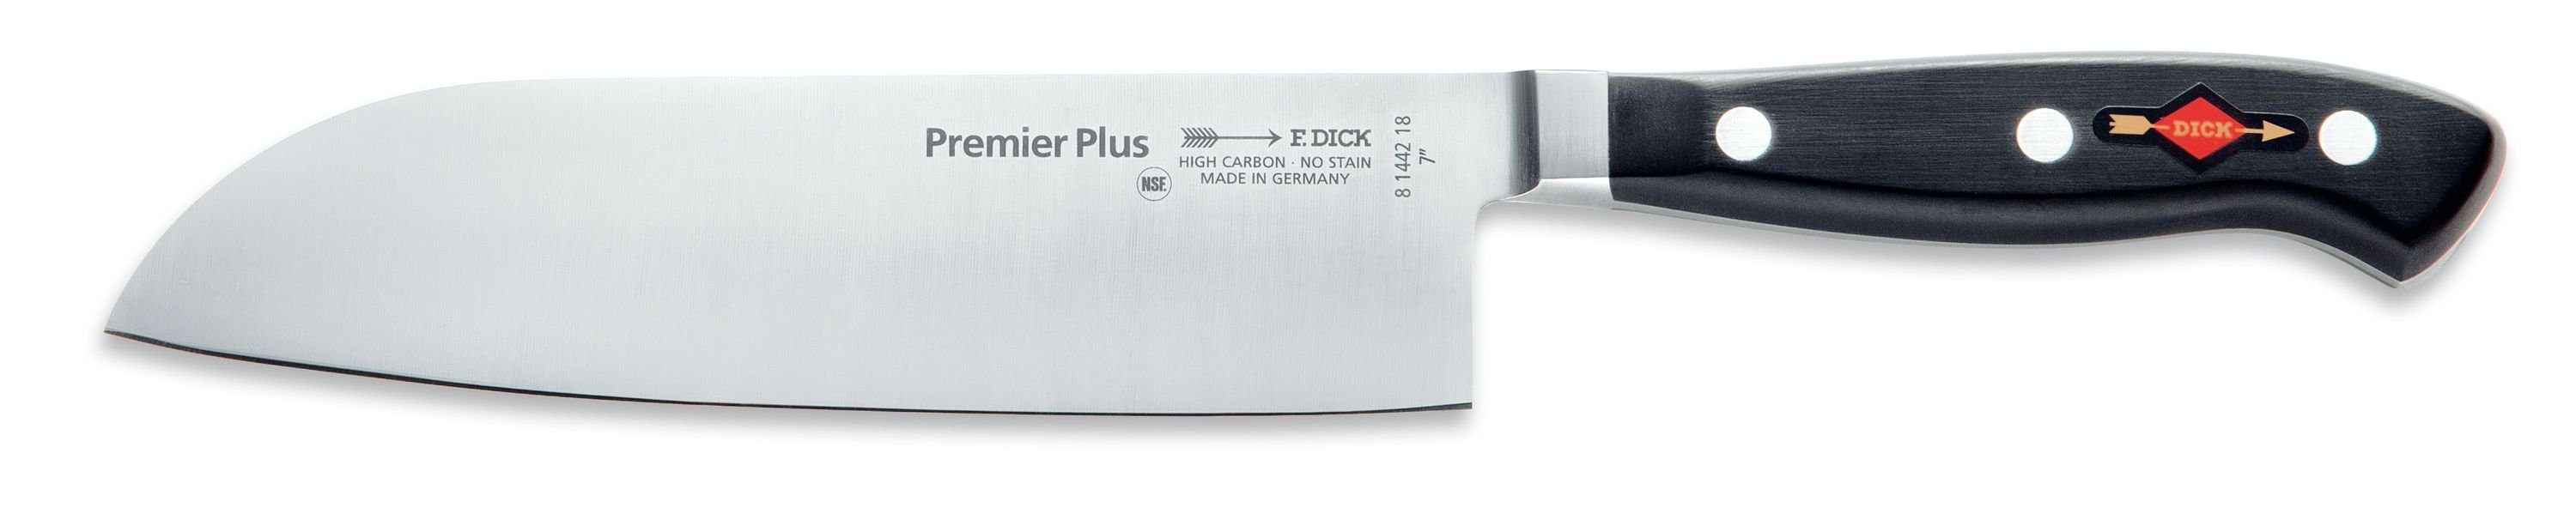 F. DICK Dick Santokumesser, Premier Plus Serie Santokumesser Professionelles Küchenmesser von 18 cm Edelstahl 56 ° HRC